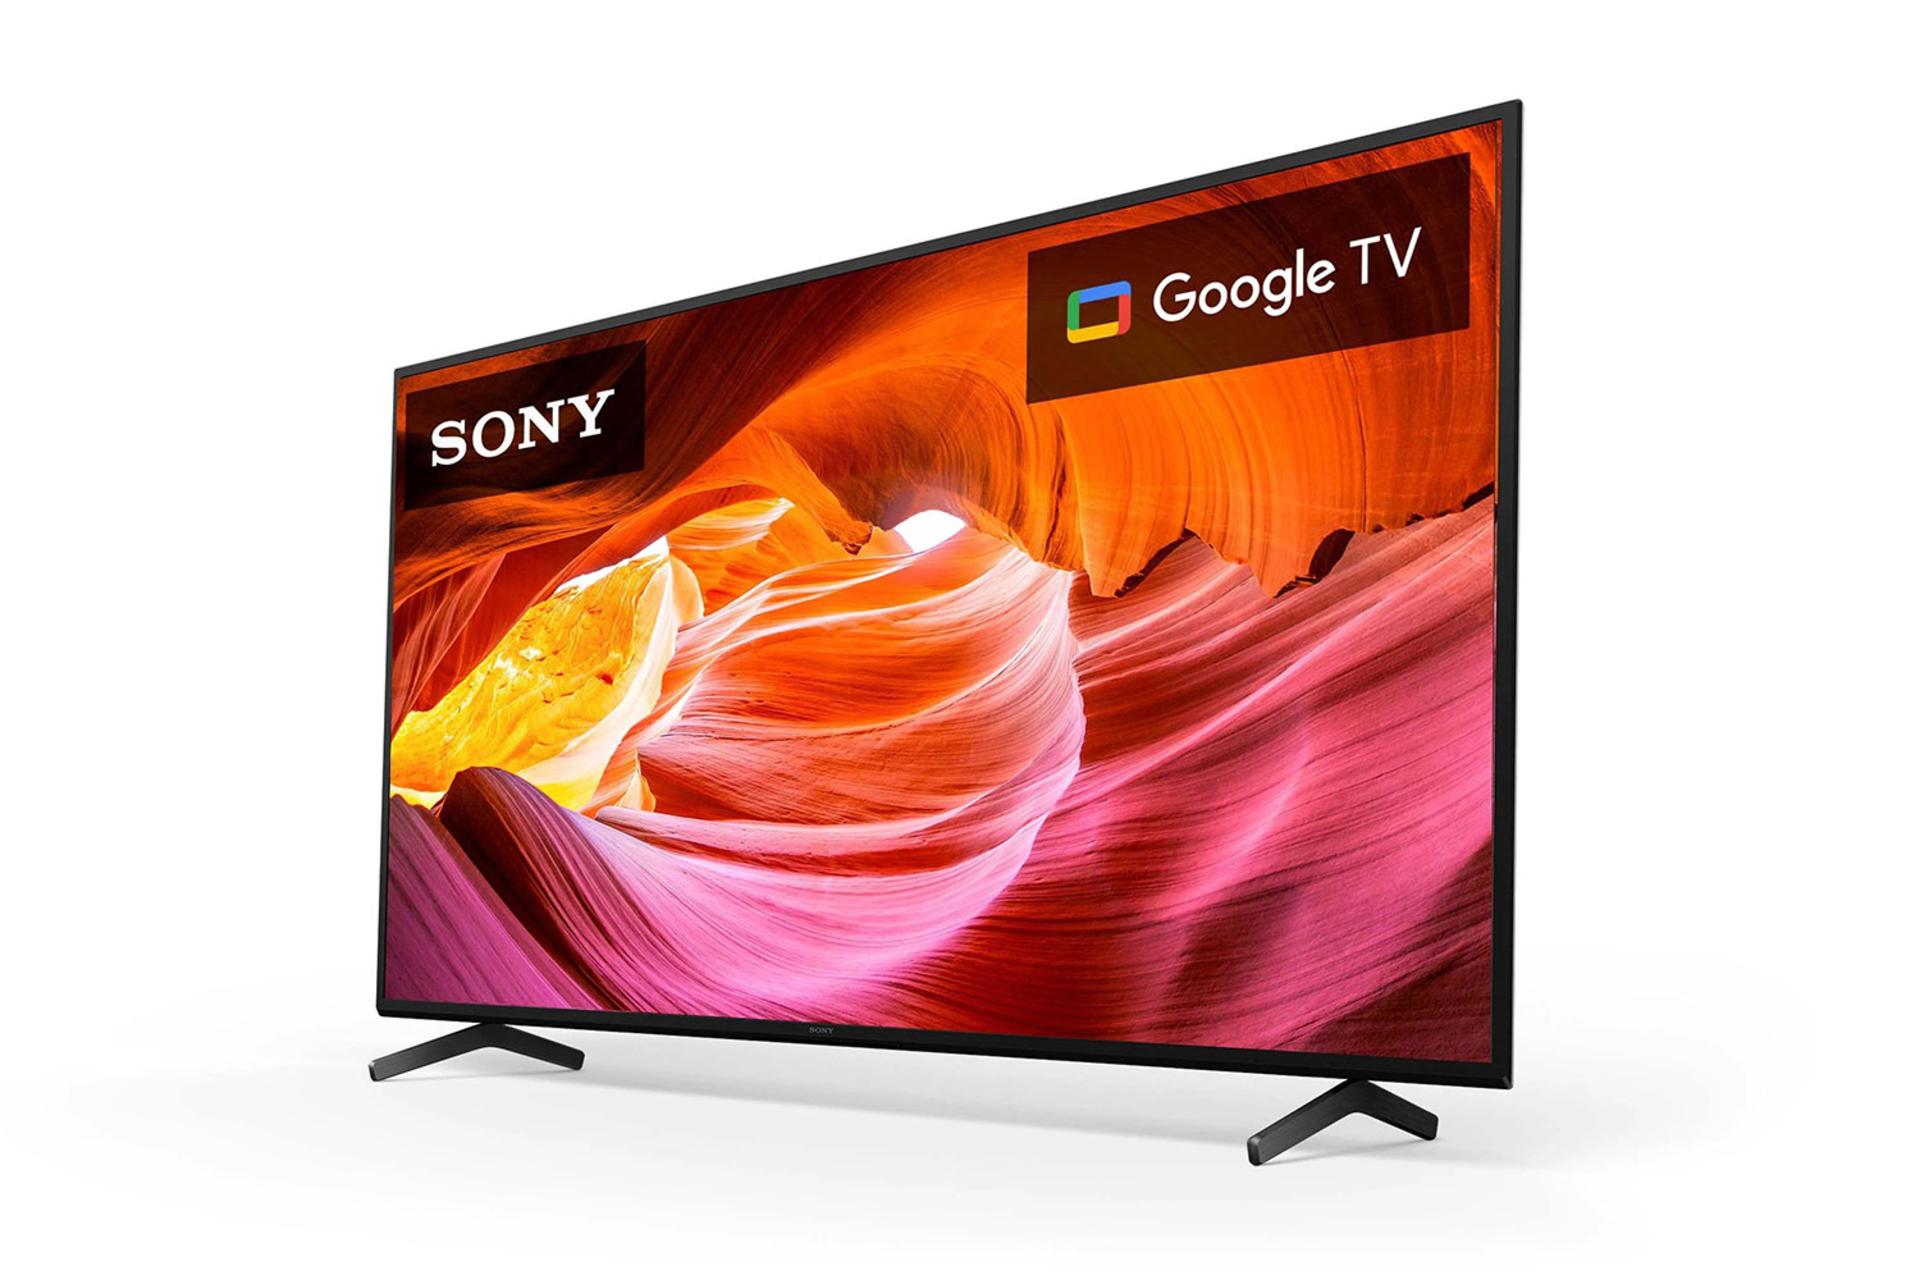 قیمت تلویزیون سونی 65X75K مدل 65 اینچ + مشخصات